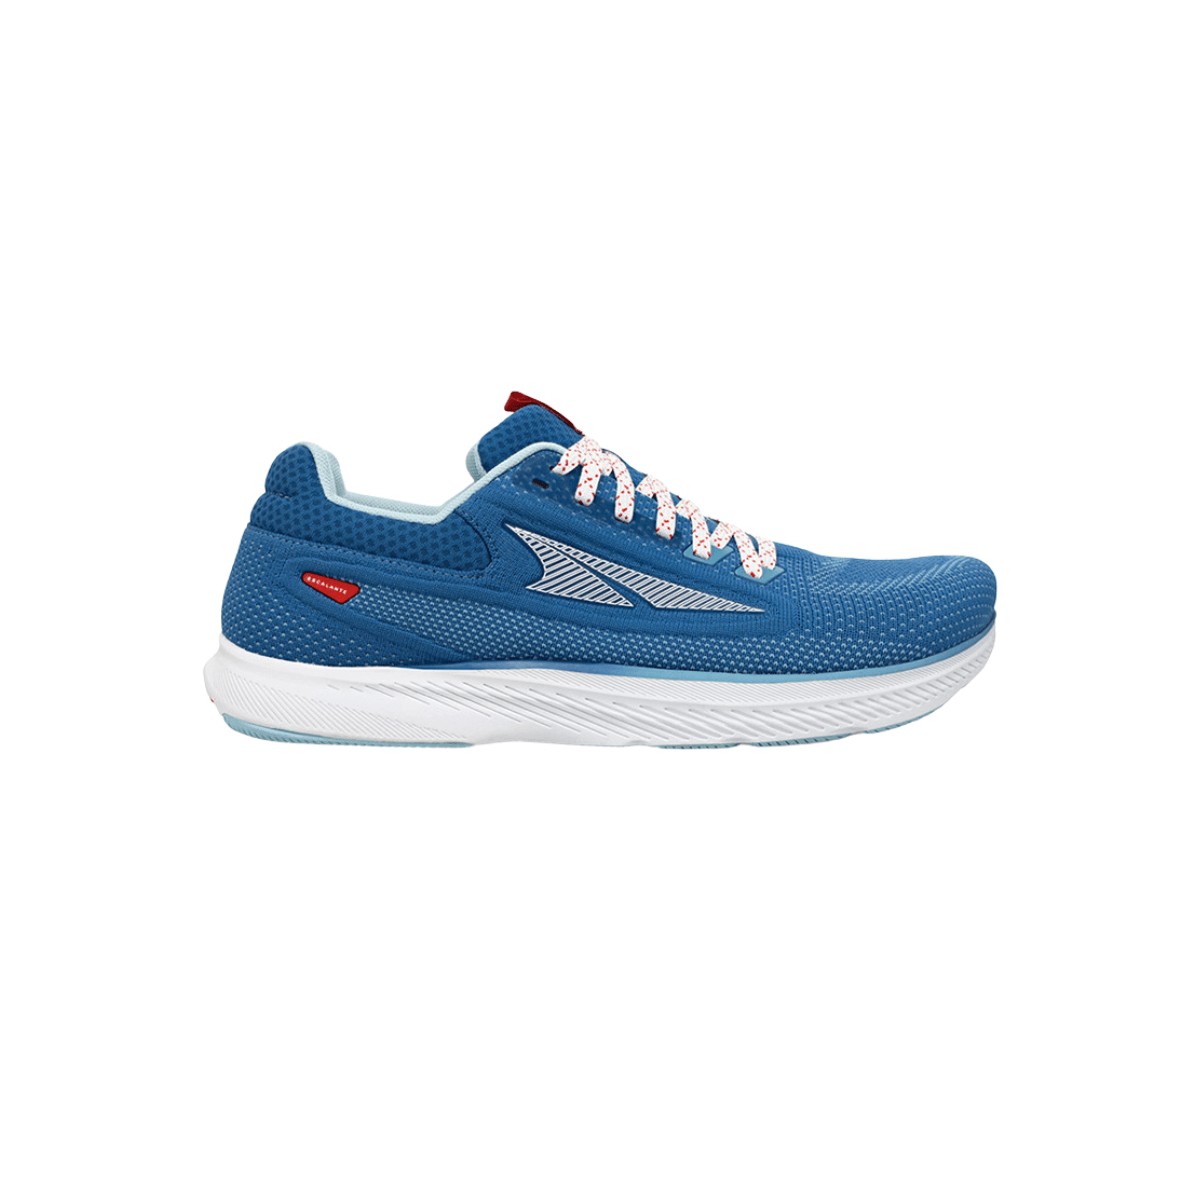 Altra Escalante 3.0 Blue Running Shoes AW22, Size 42,5 - EUR